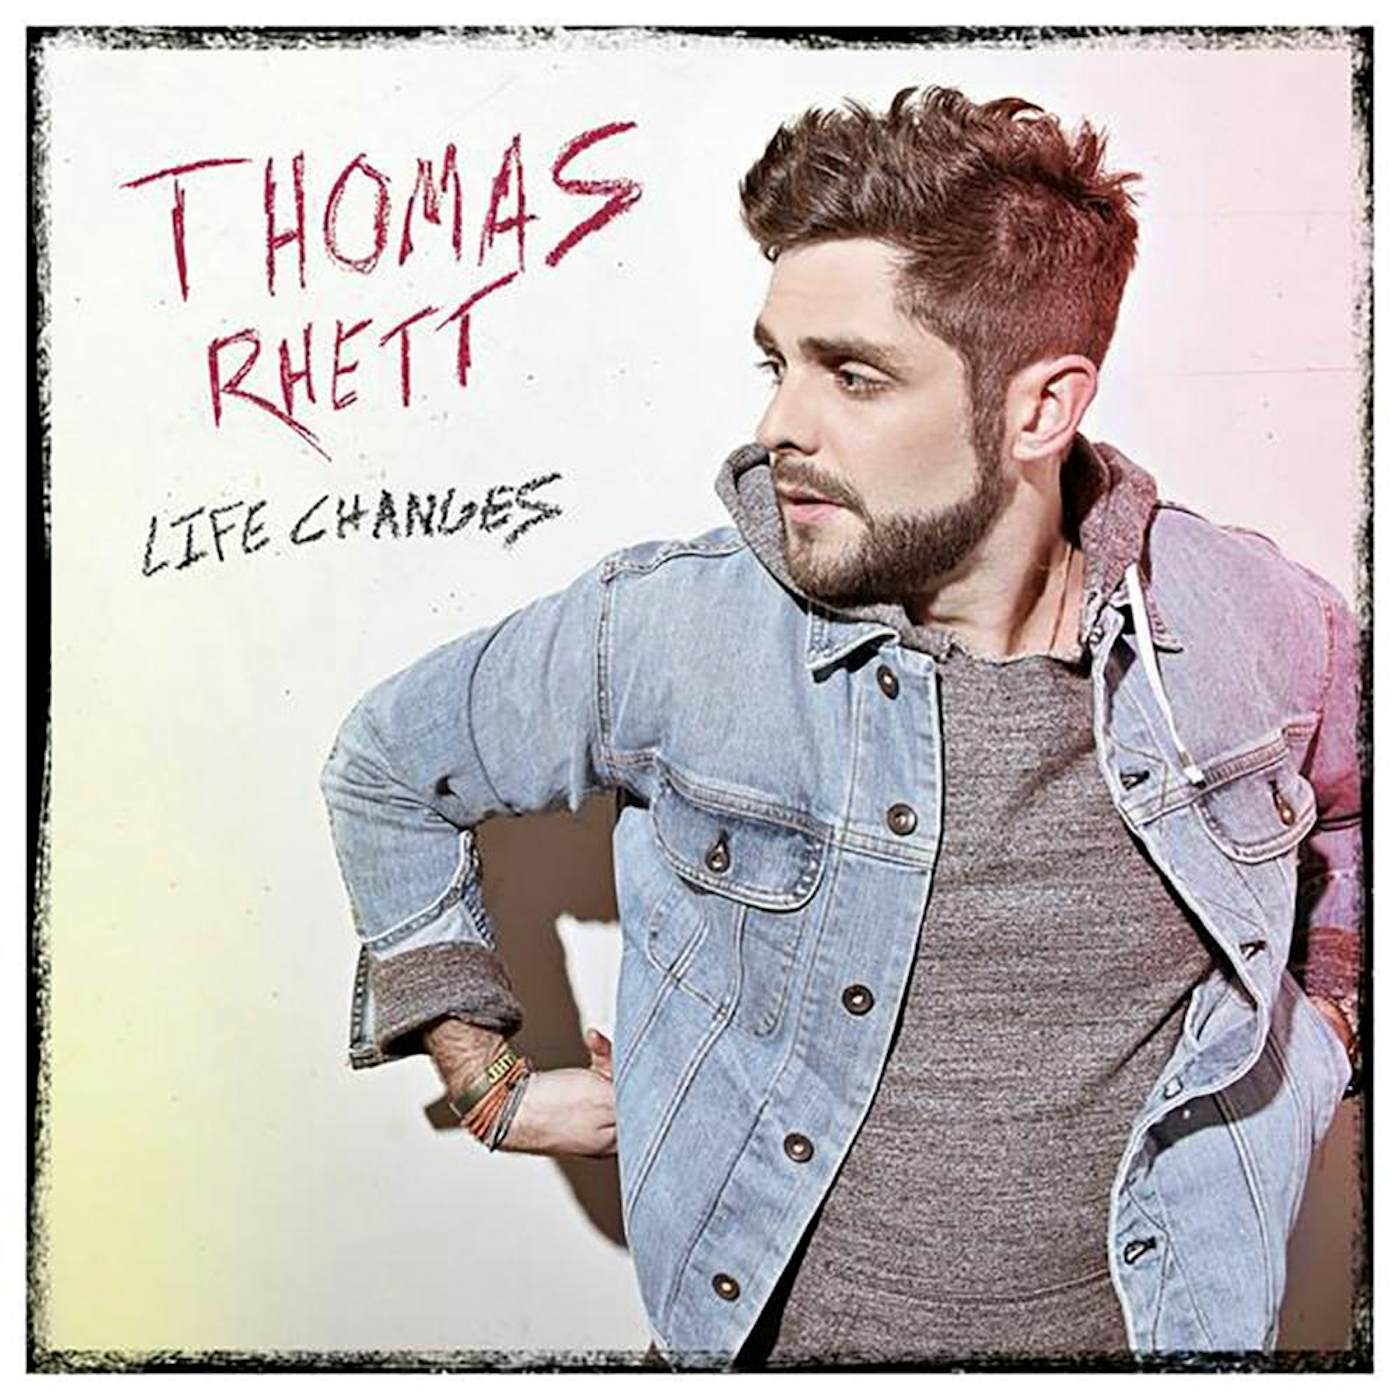 Thomas Rhett Life Changes Vinyl